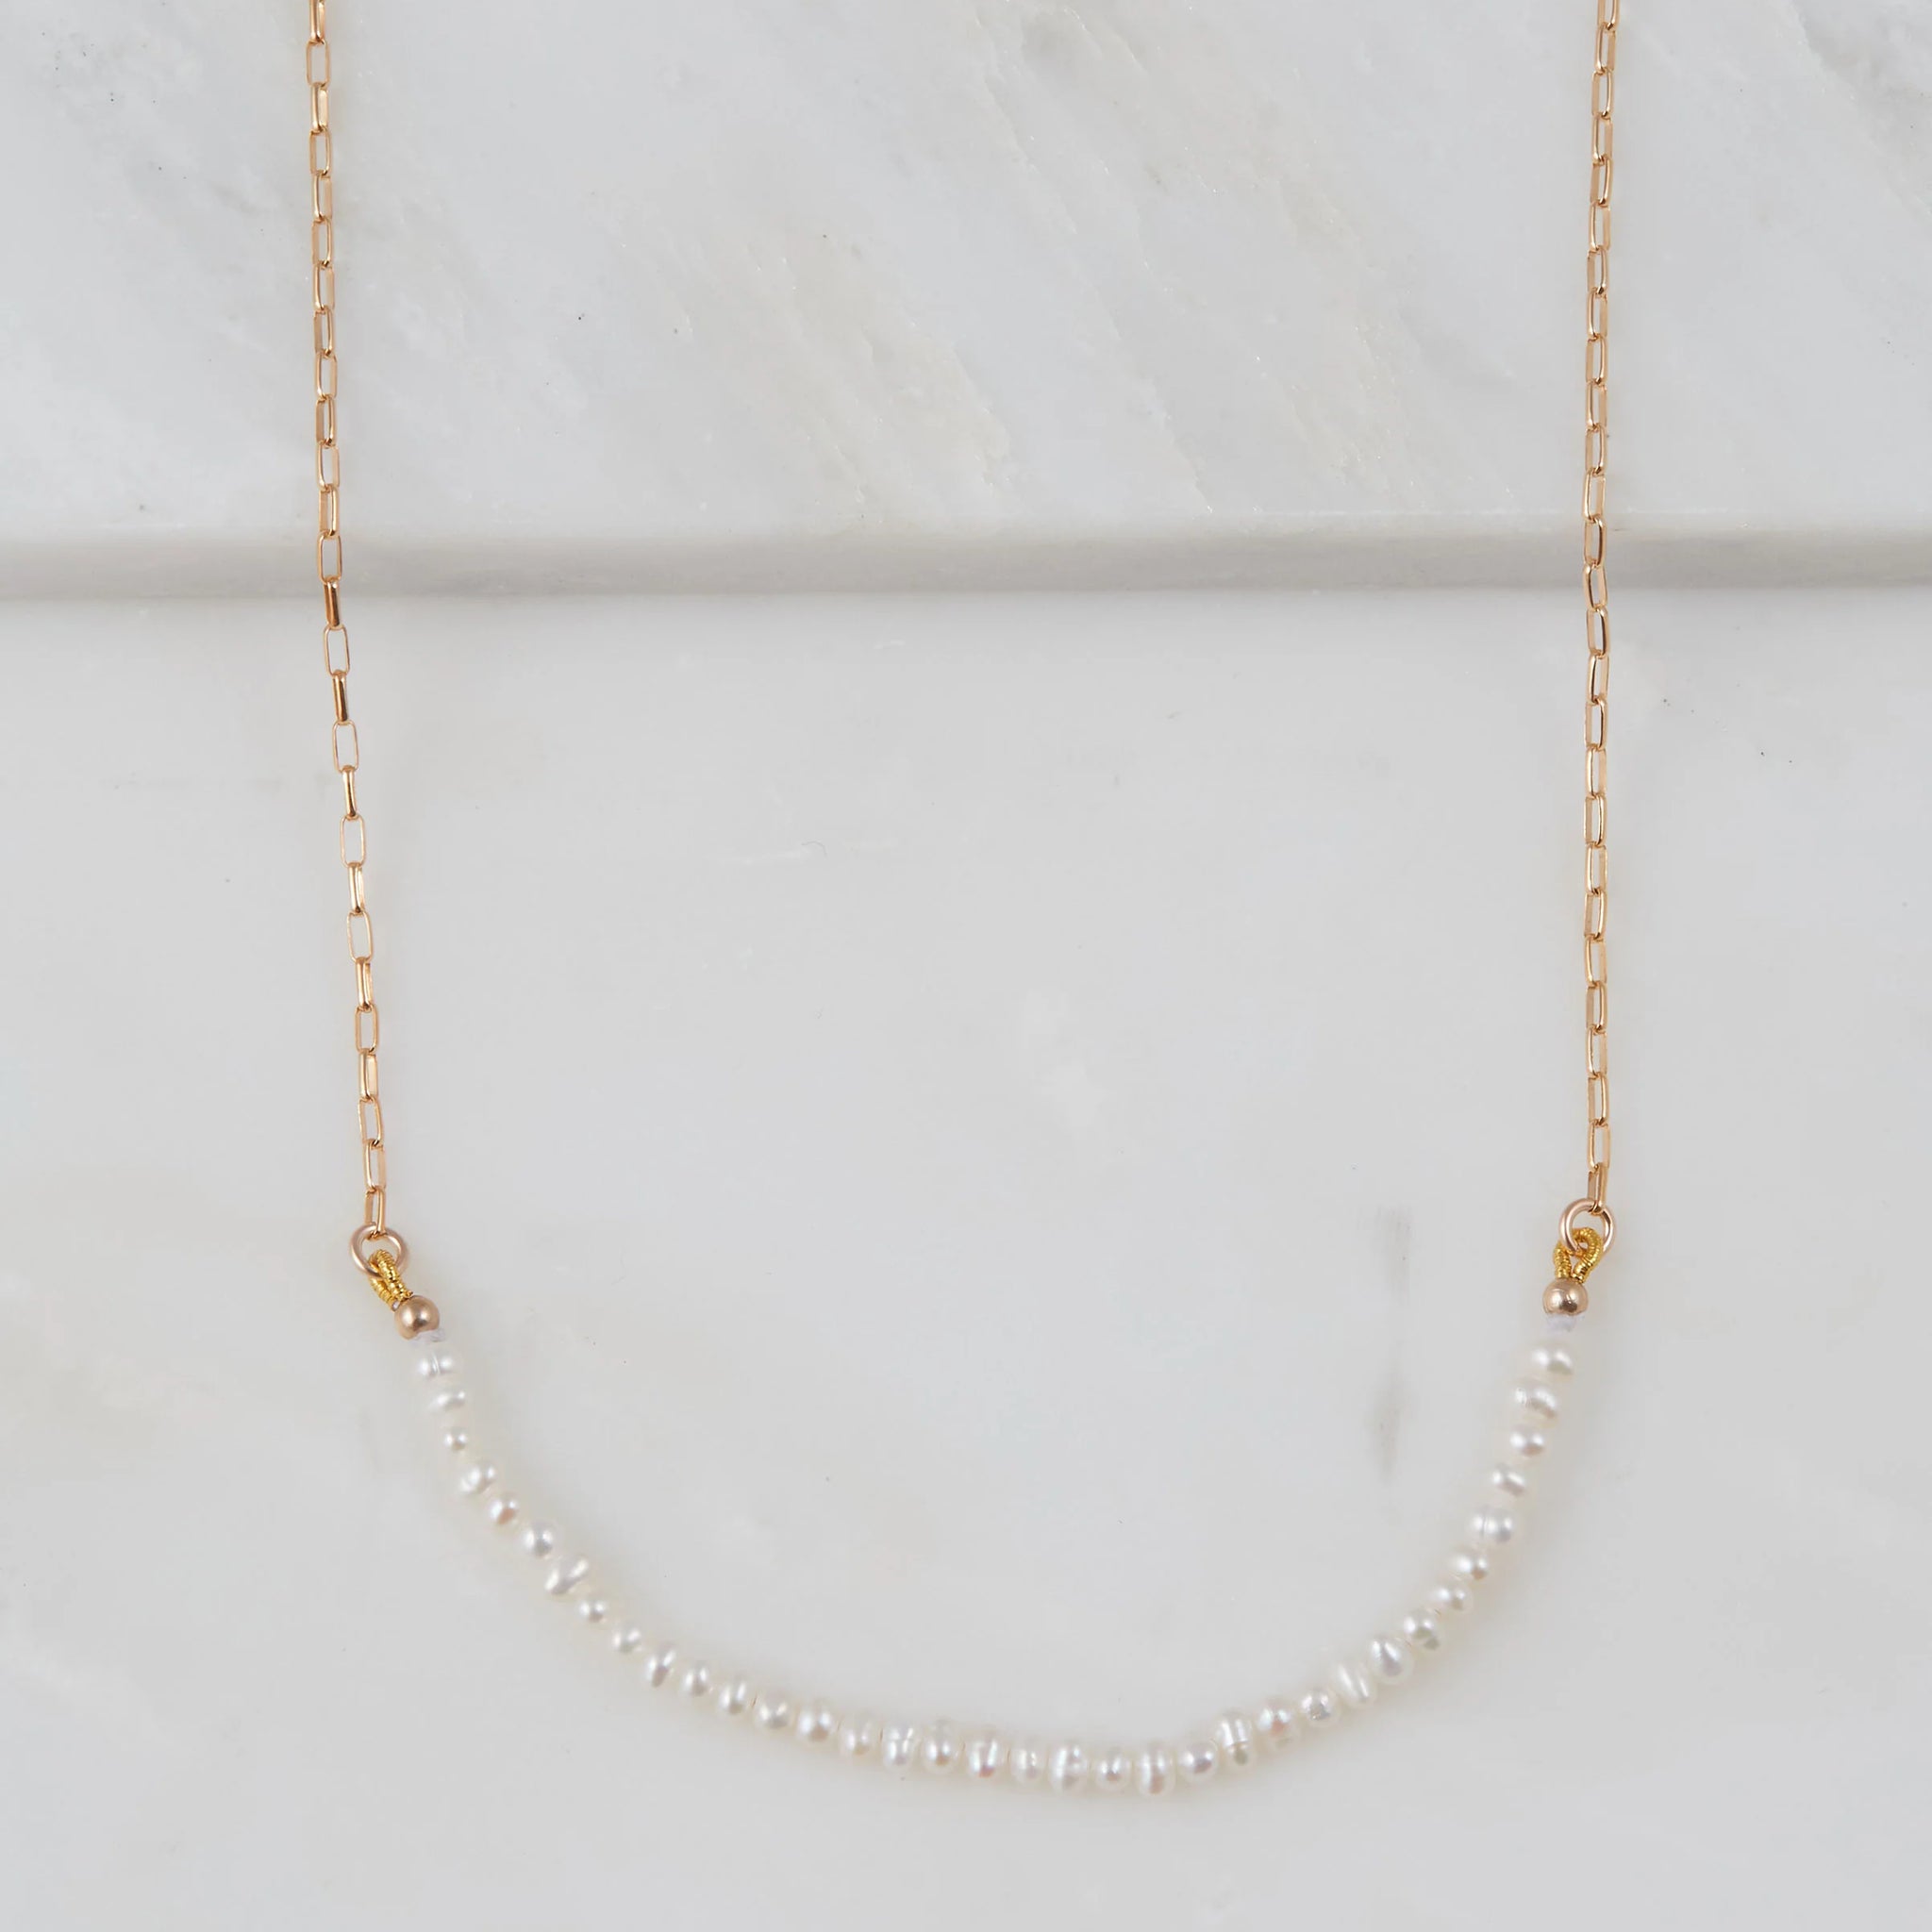 Natalie B Jewelry - Milly Necklace - Main